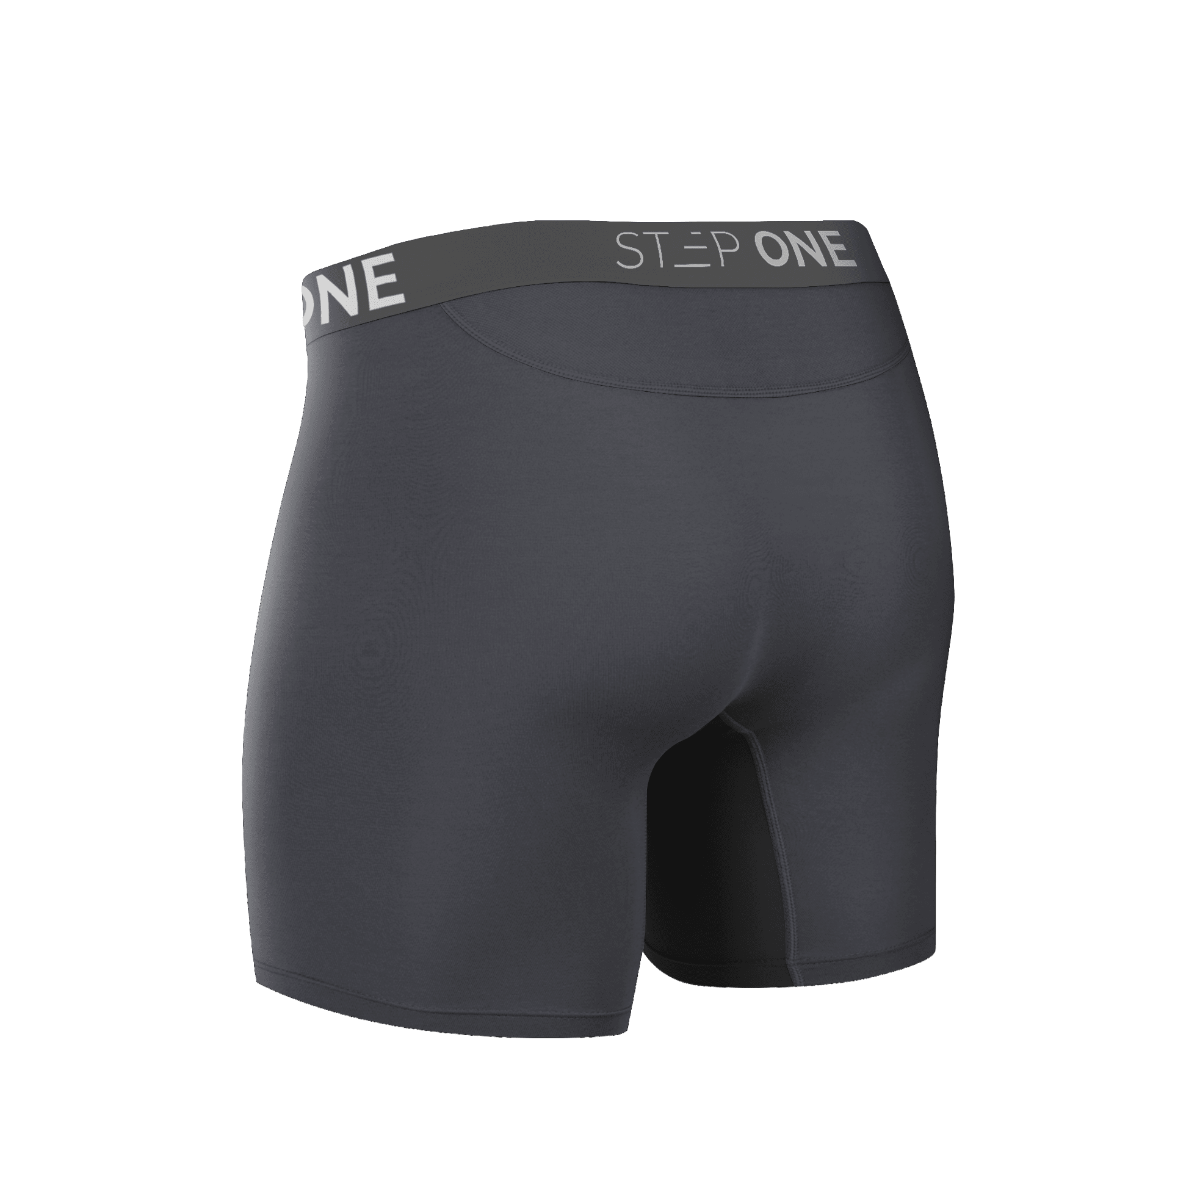 Buy Mens Underwear Online at Step One